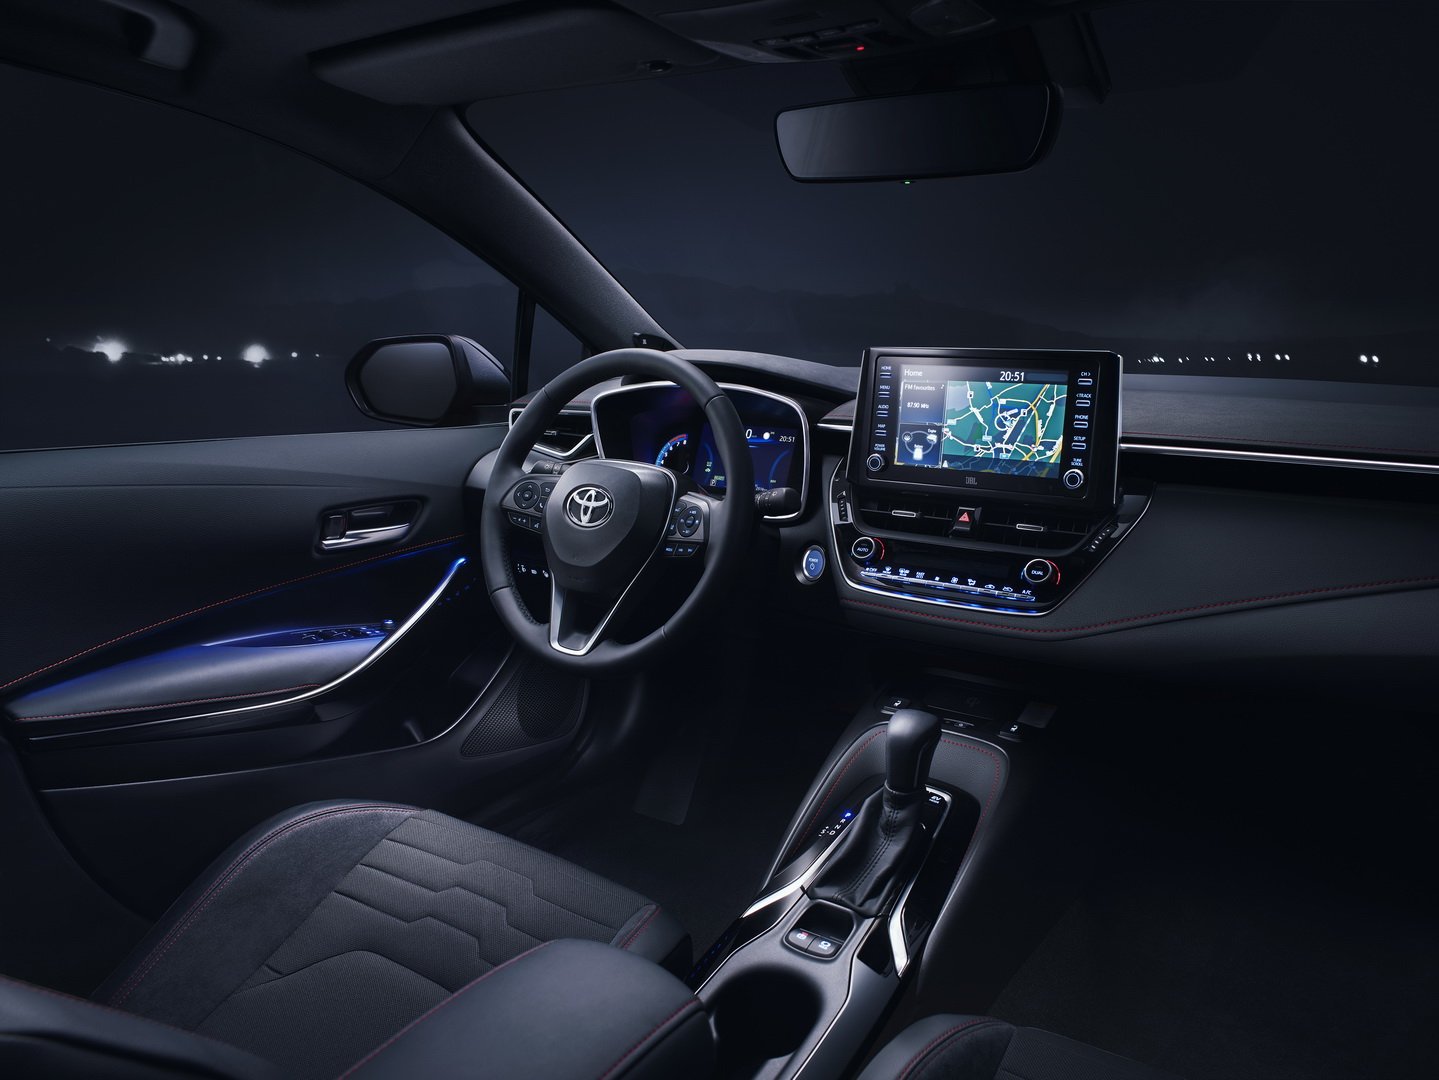 Immagine interni nuova Toyota Corolla 2019 Hatchback